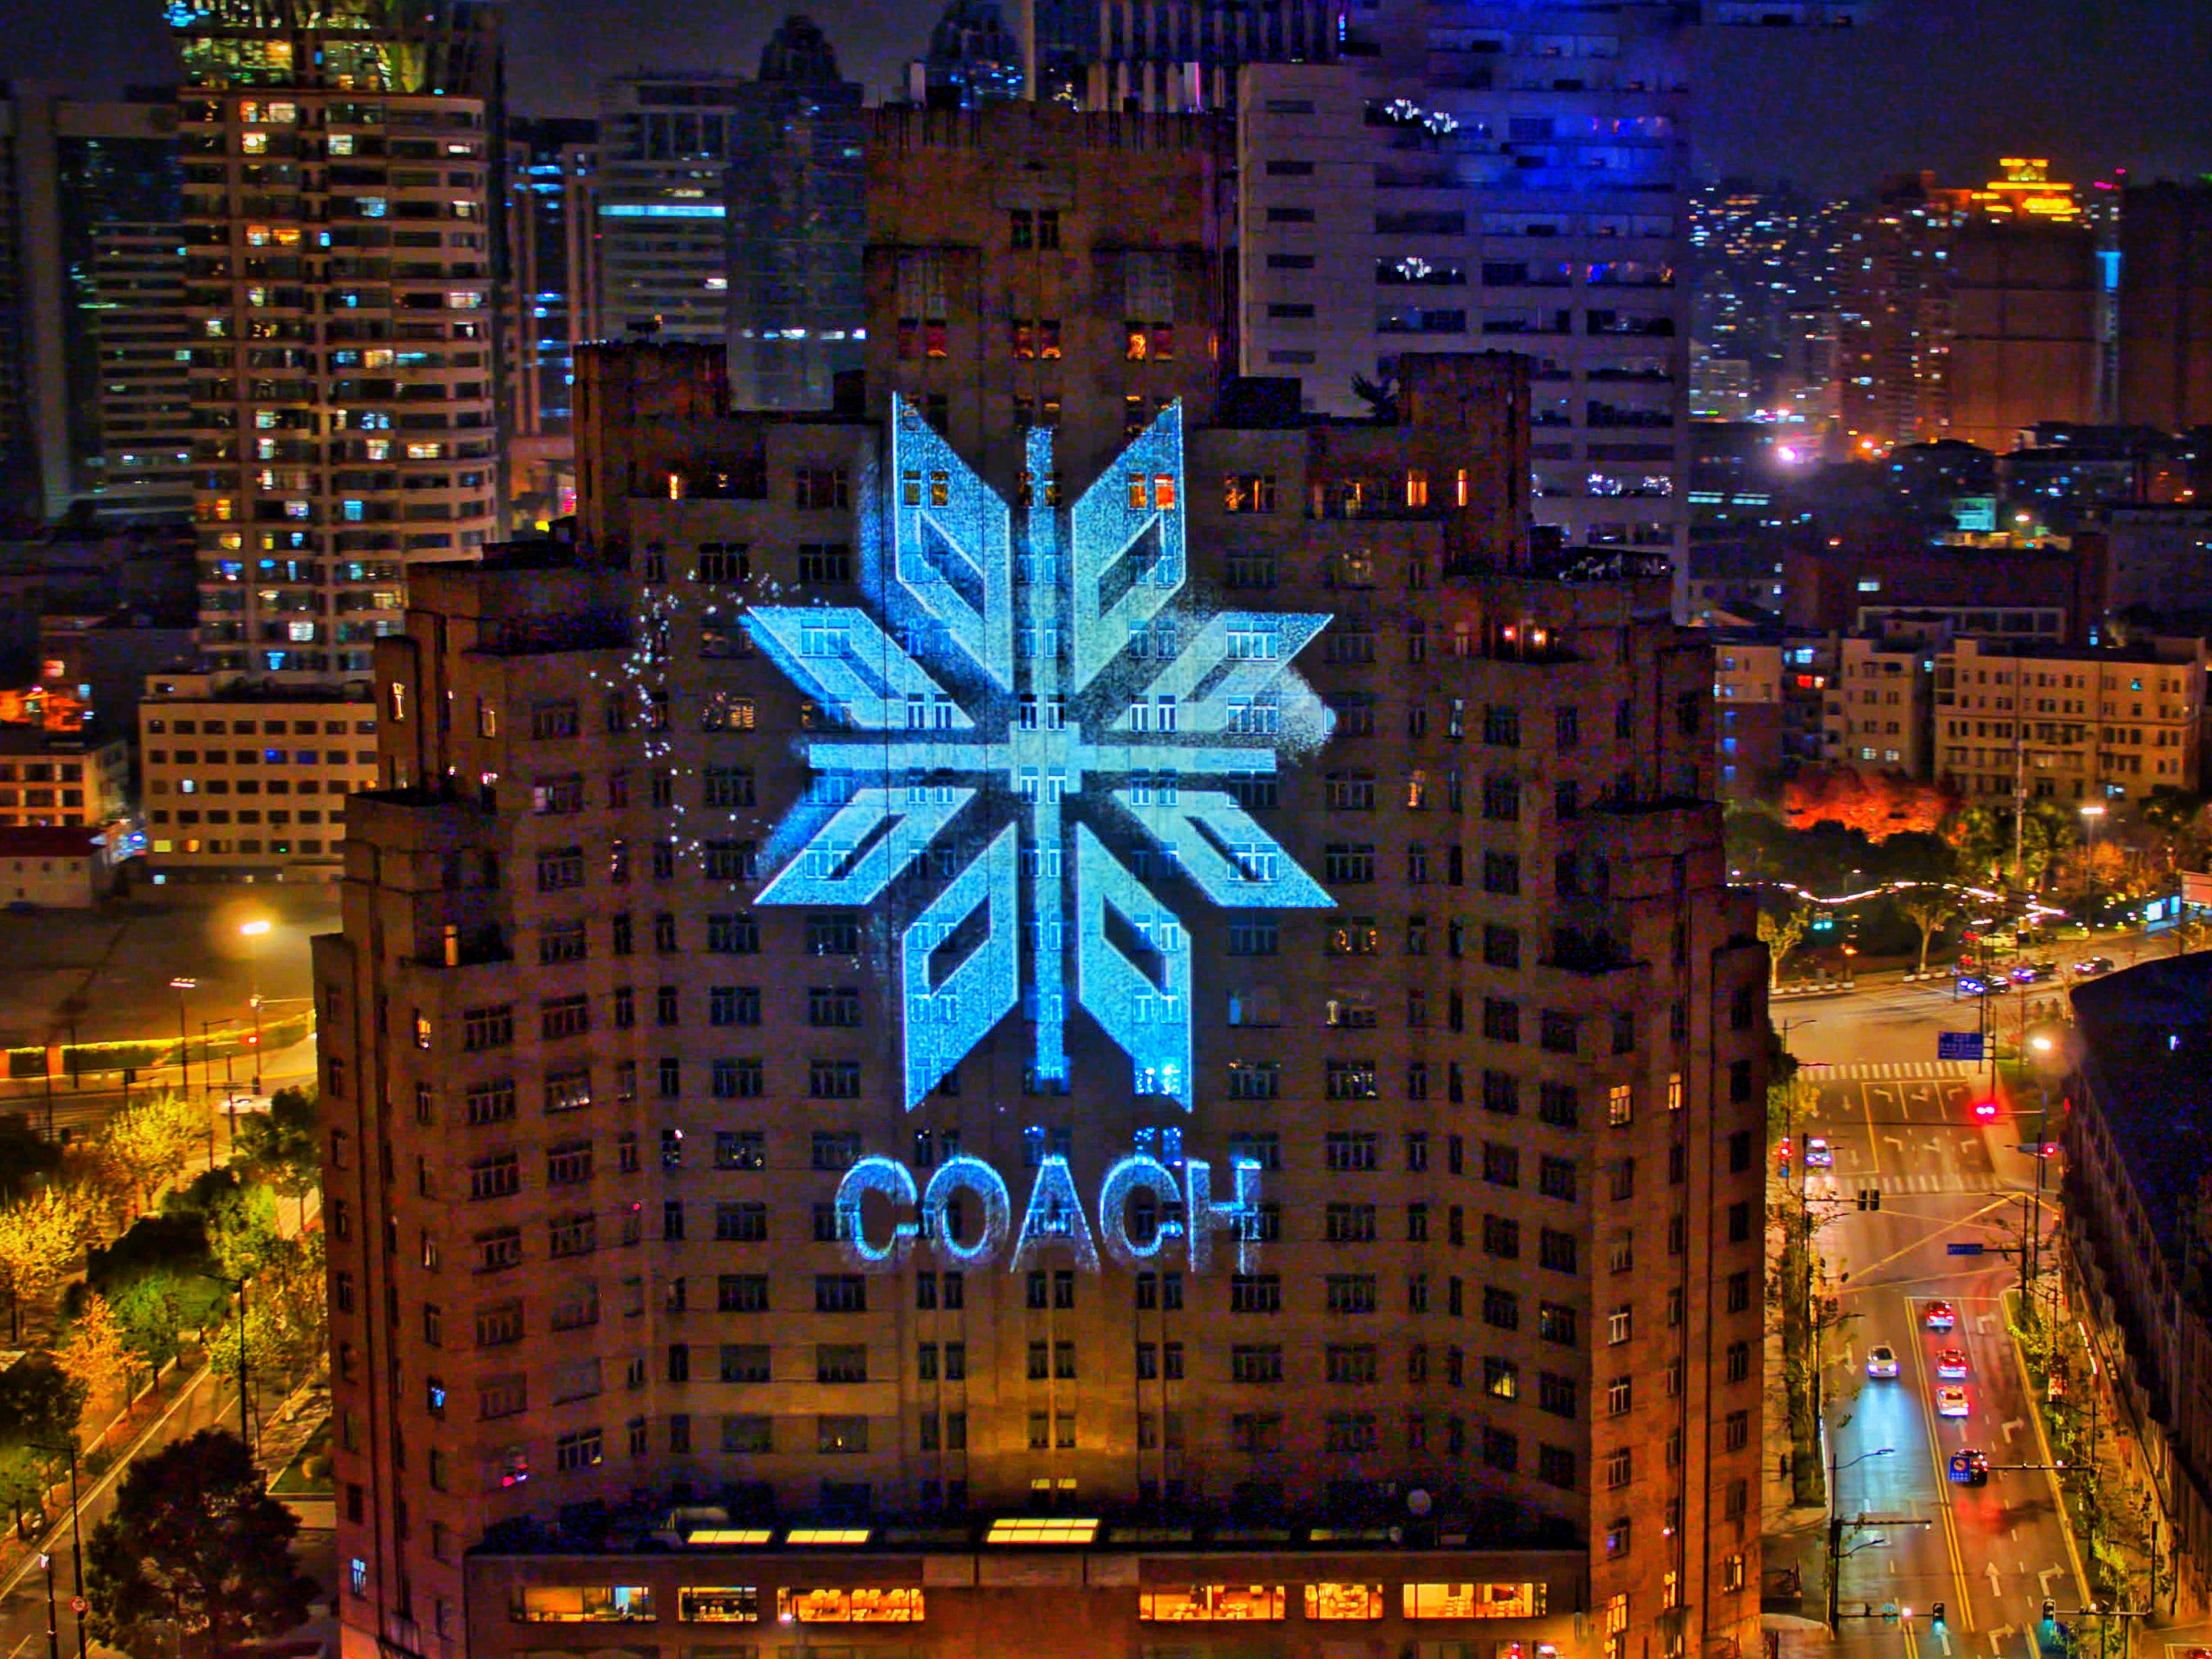 COACH上海大厦“雪之城”假日3D墙体秀